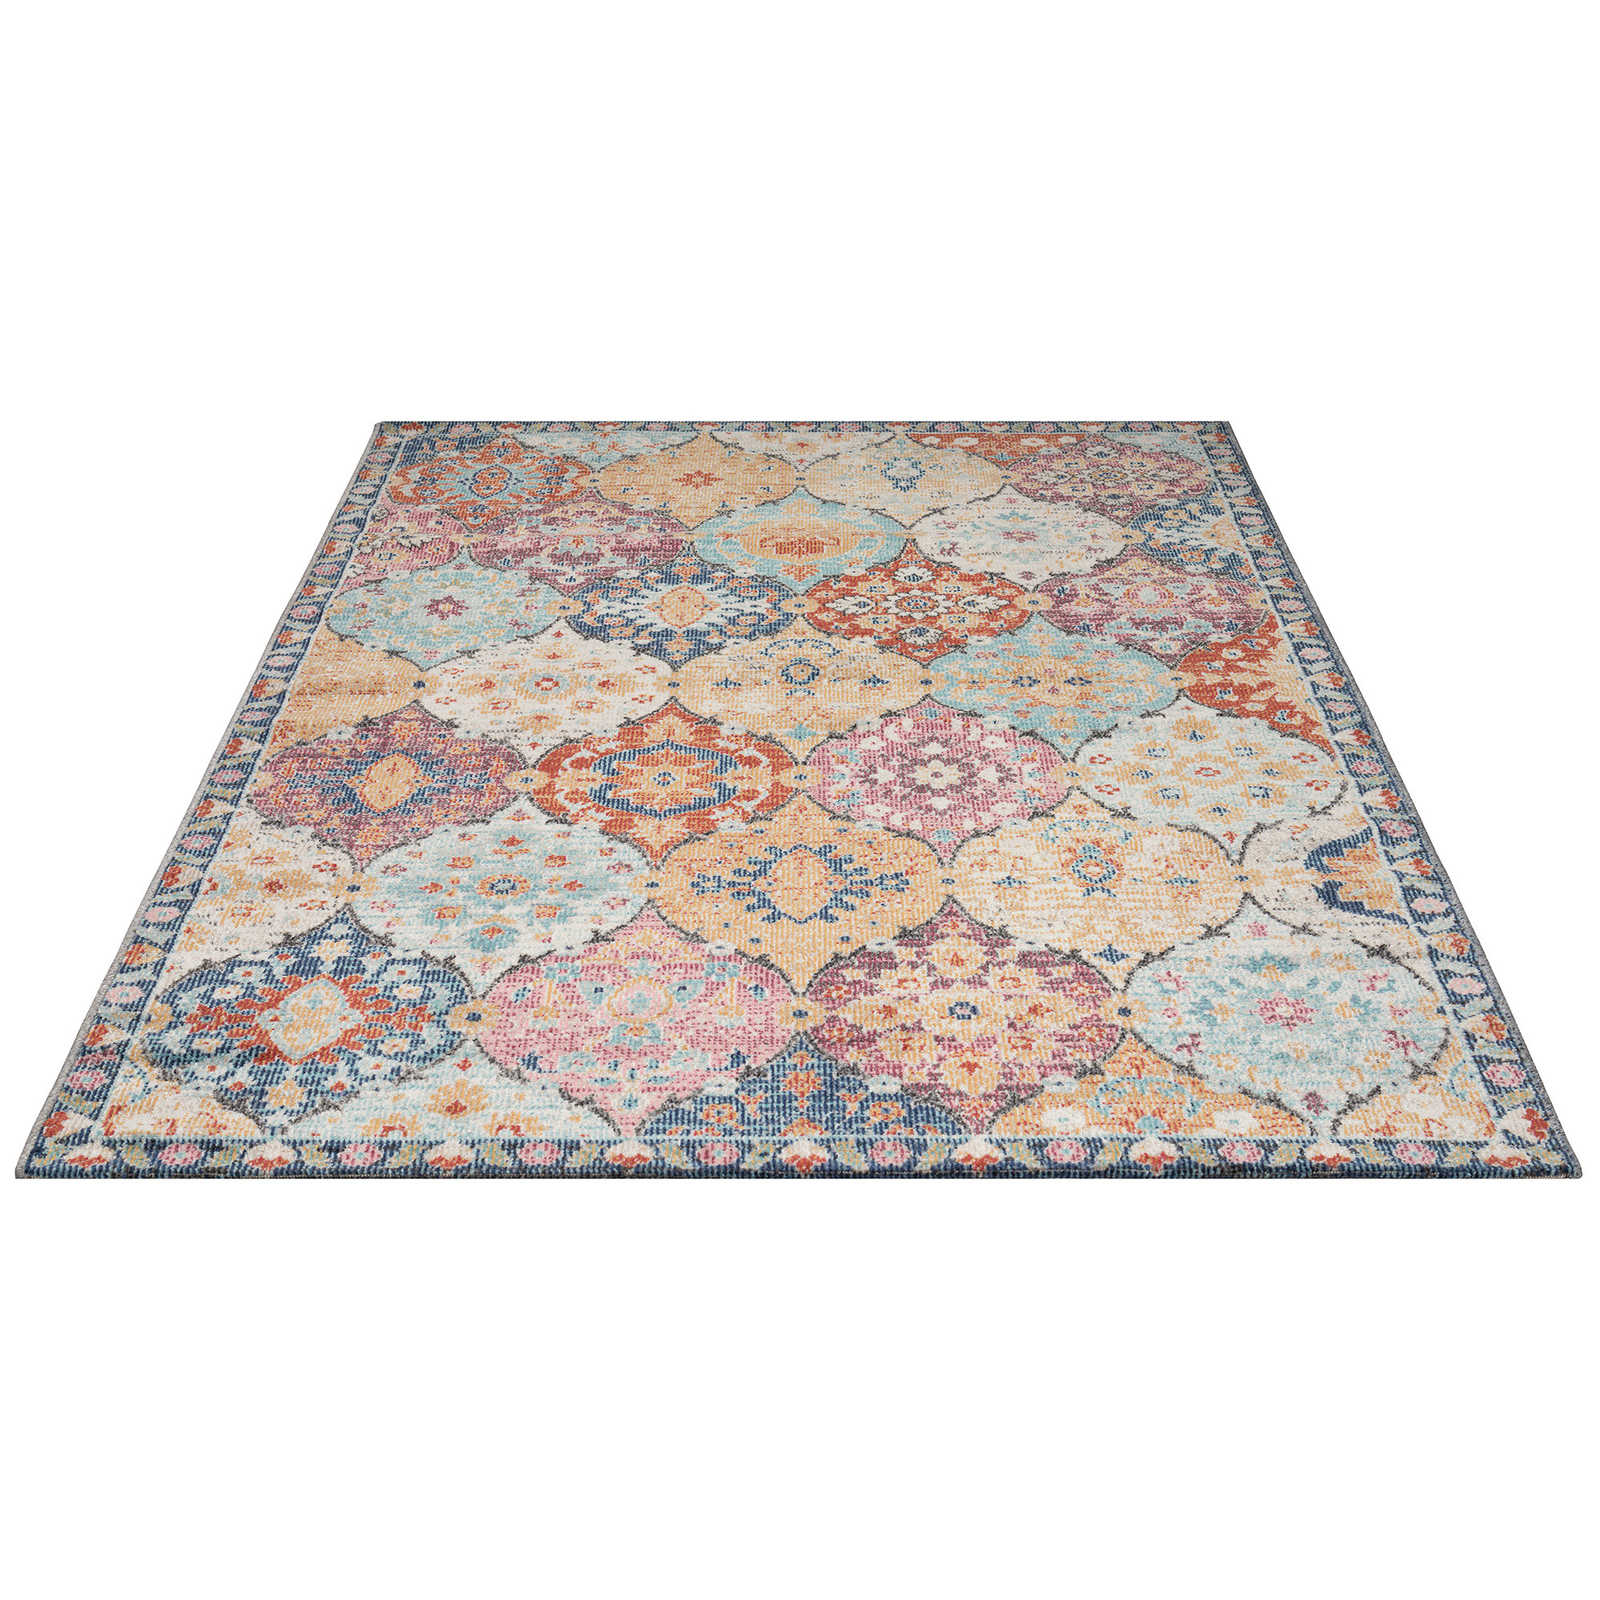 Bunter Outdoor Teppich aus Flachgewebe – 340 x 240 cm
